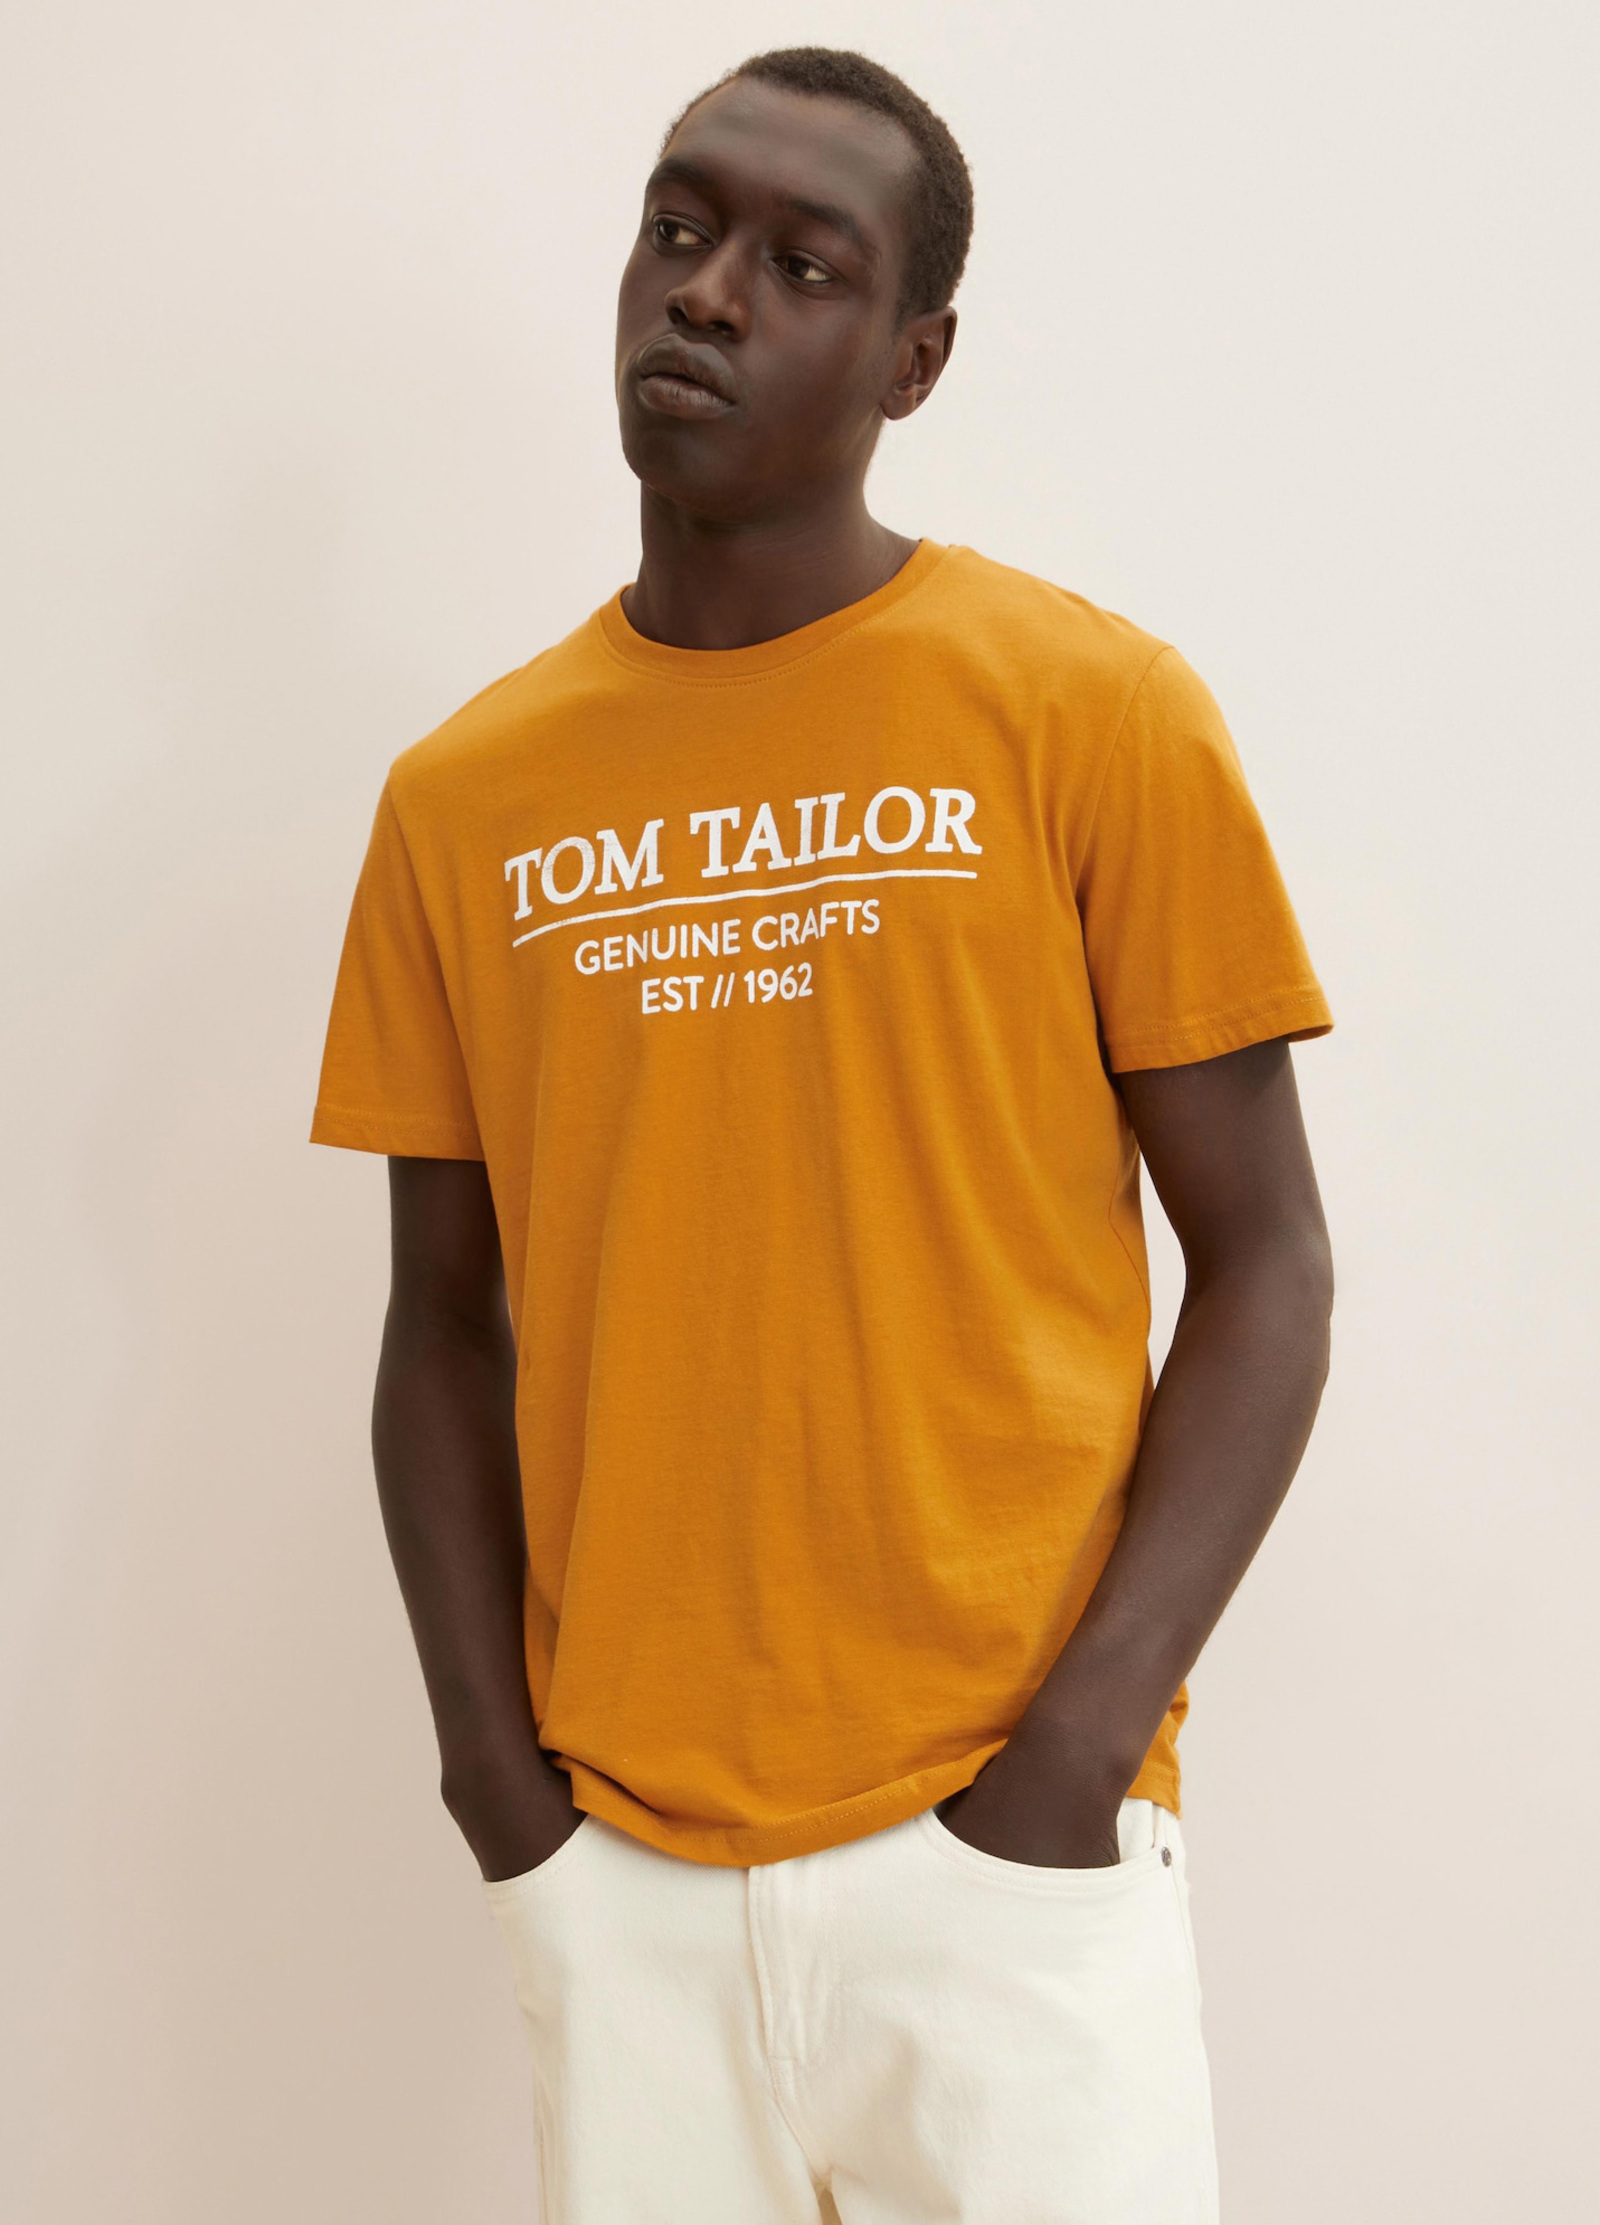 Tom Tailor® T-shirt Logo - Size Peanut Butter Brown L